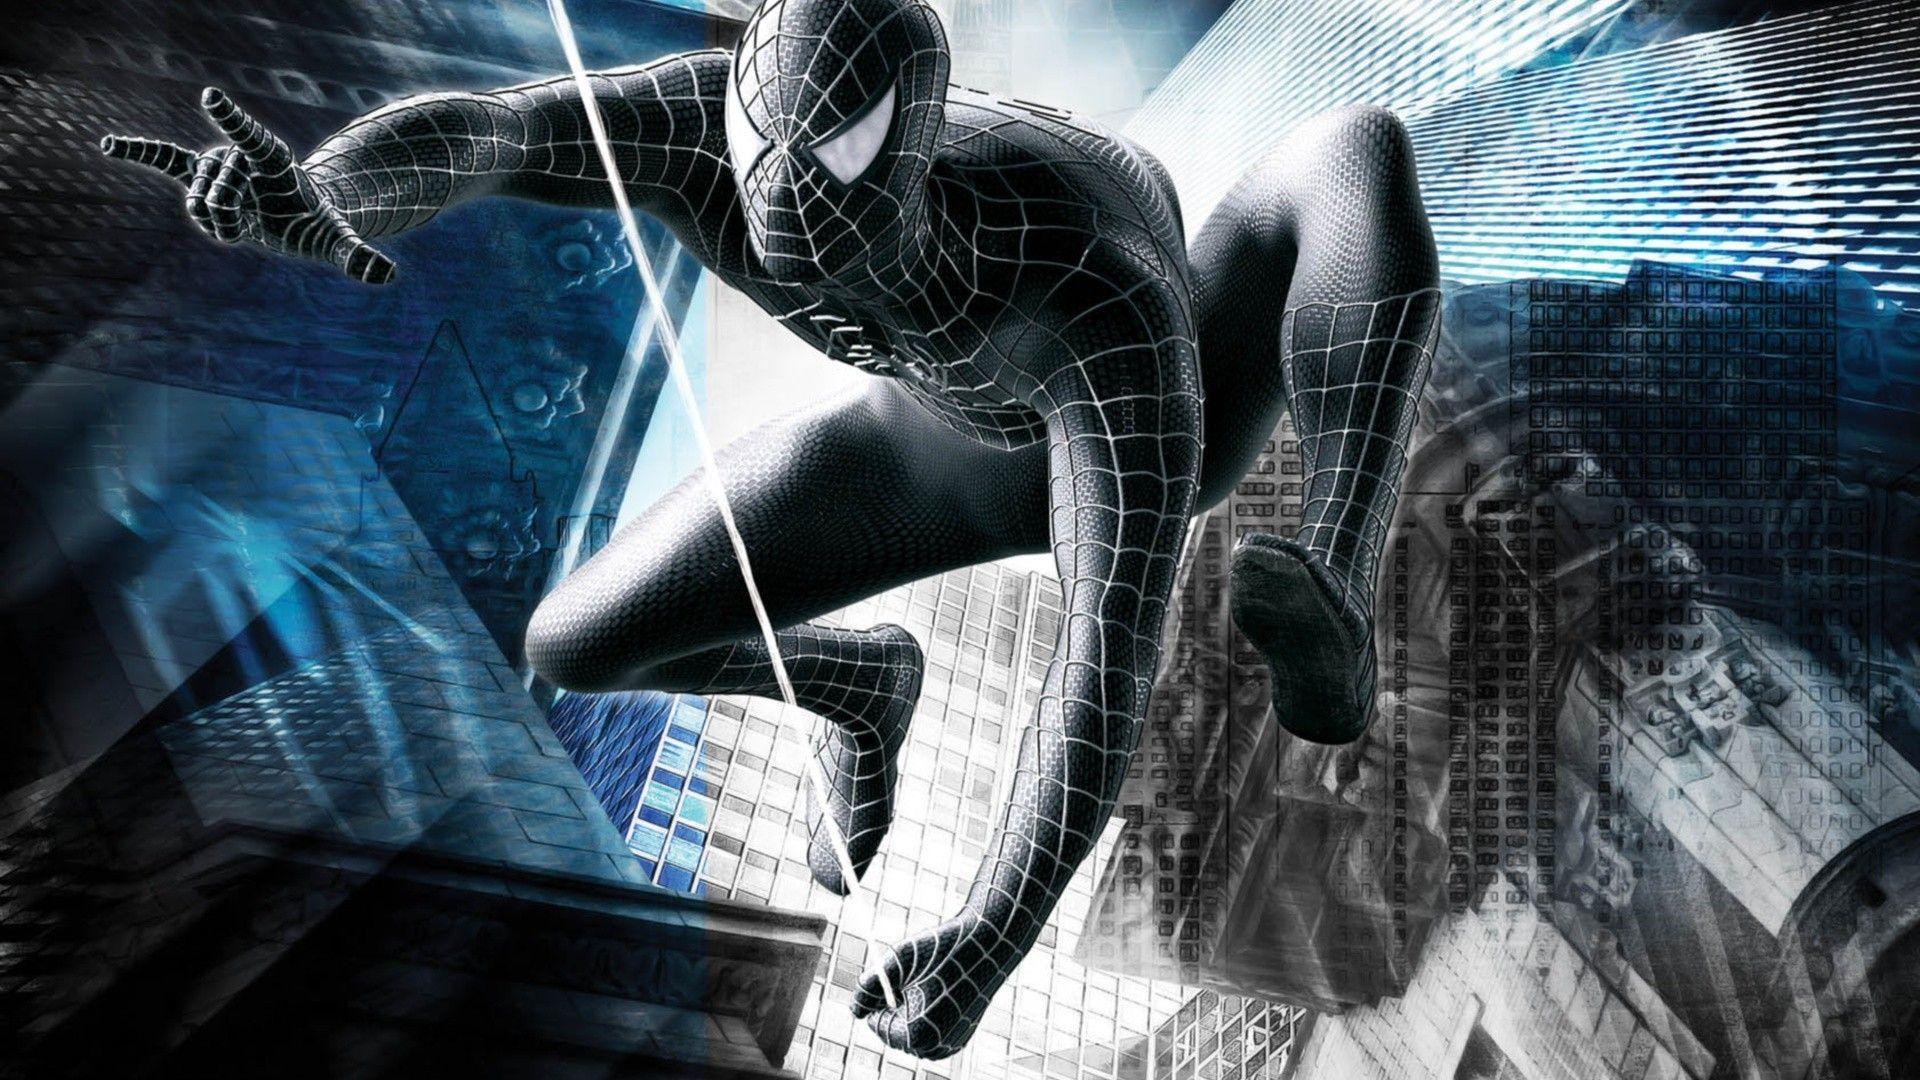 Spiderman 3 Wallpaper Gallery